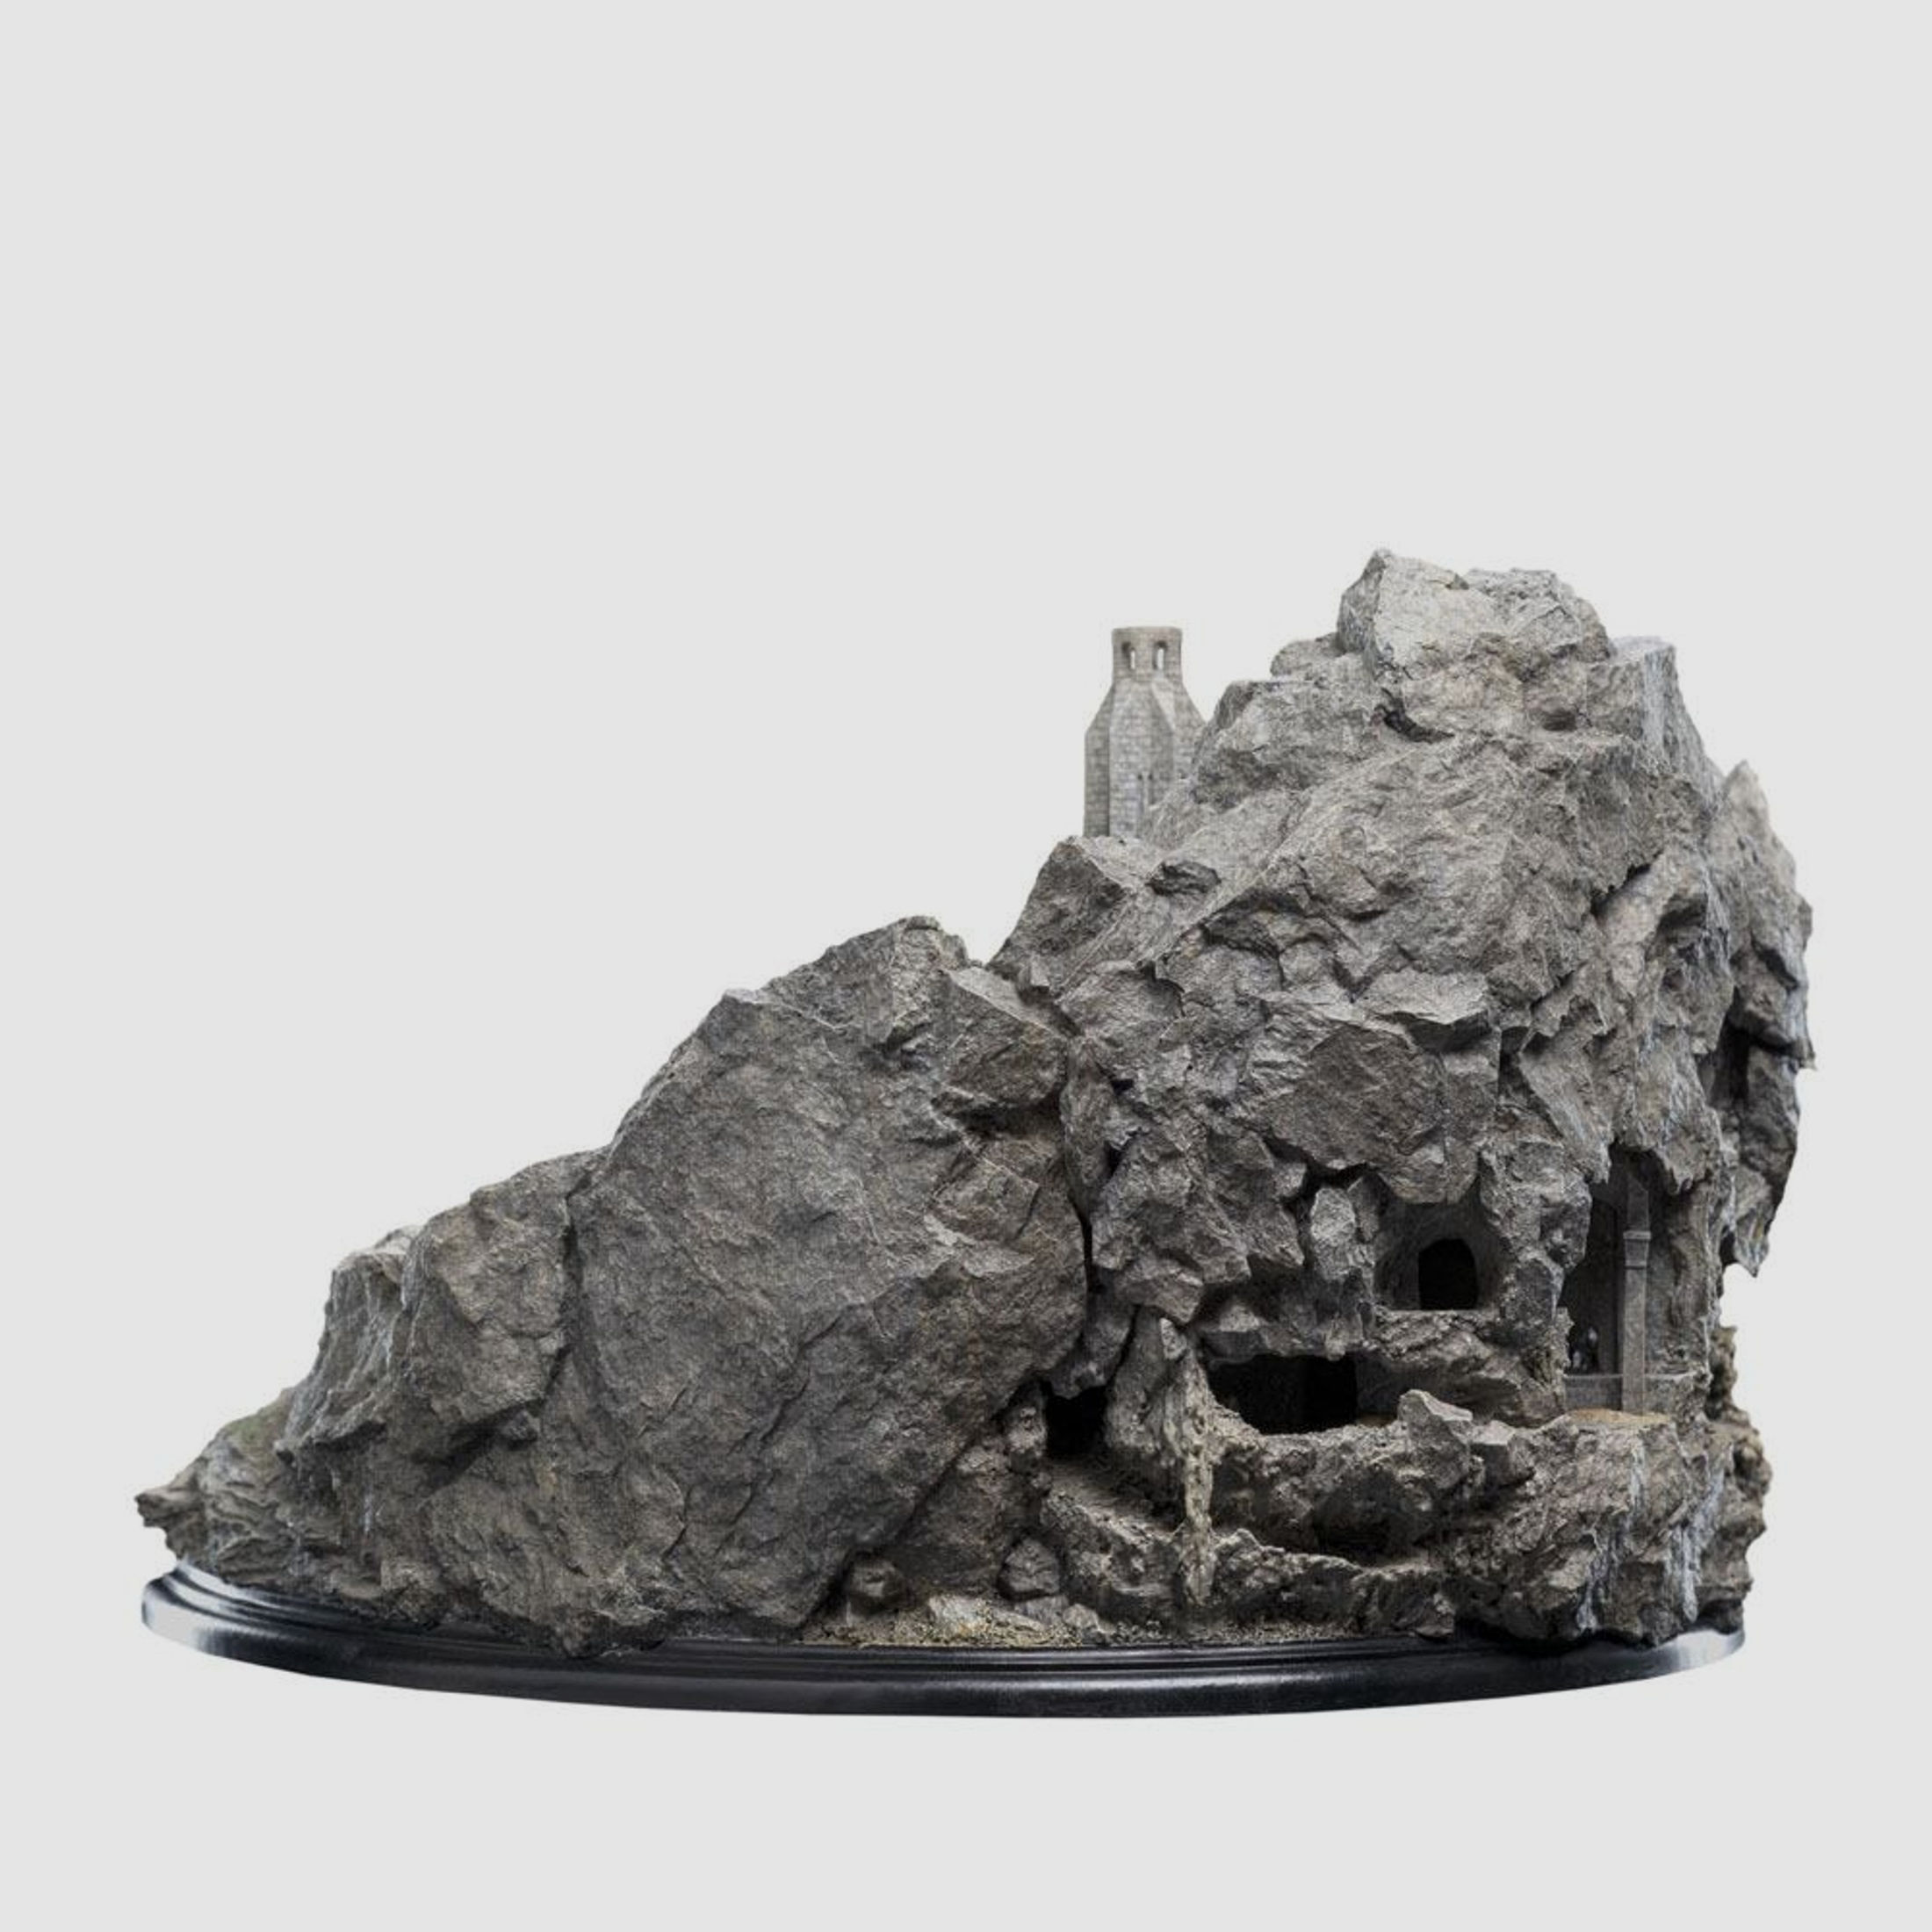 Herr der Ringe Statue Helms Klamm 27 cm | 42729